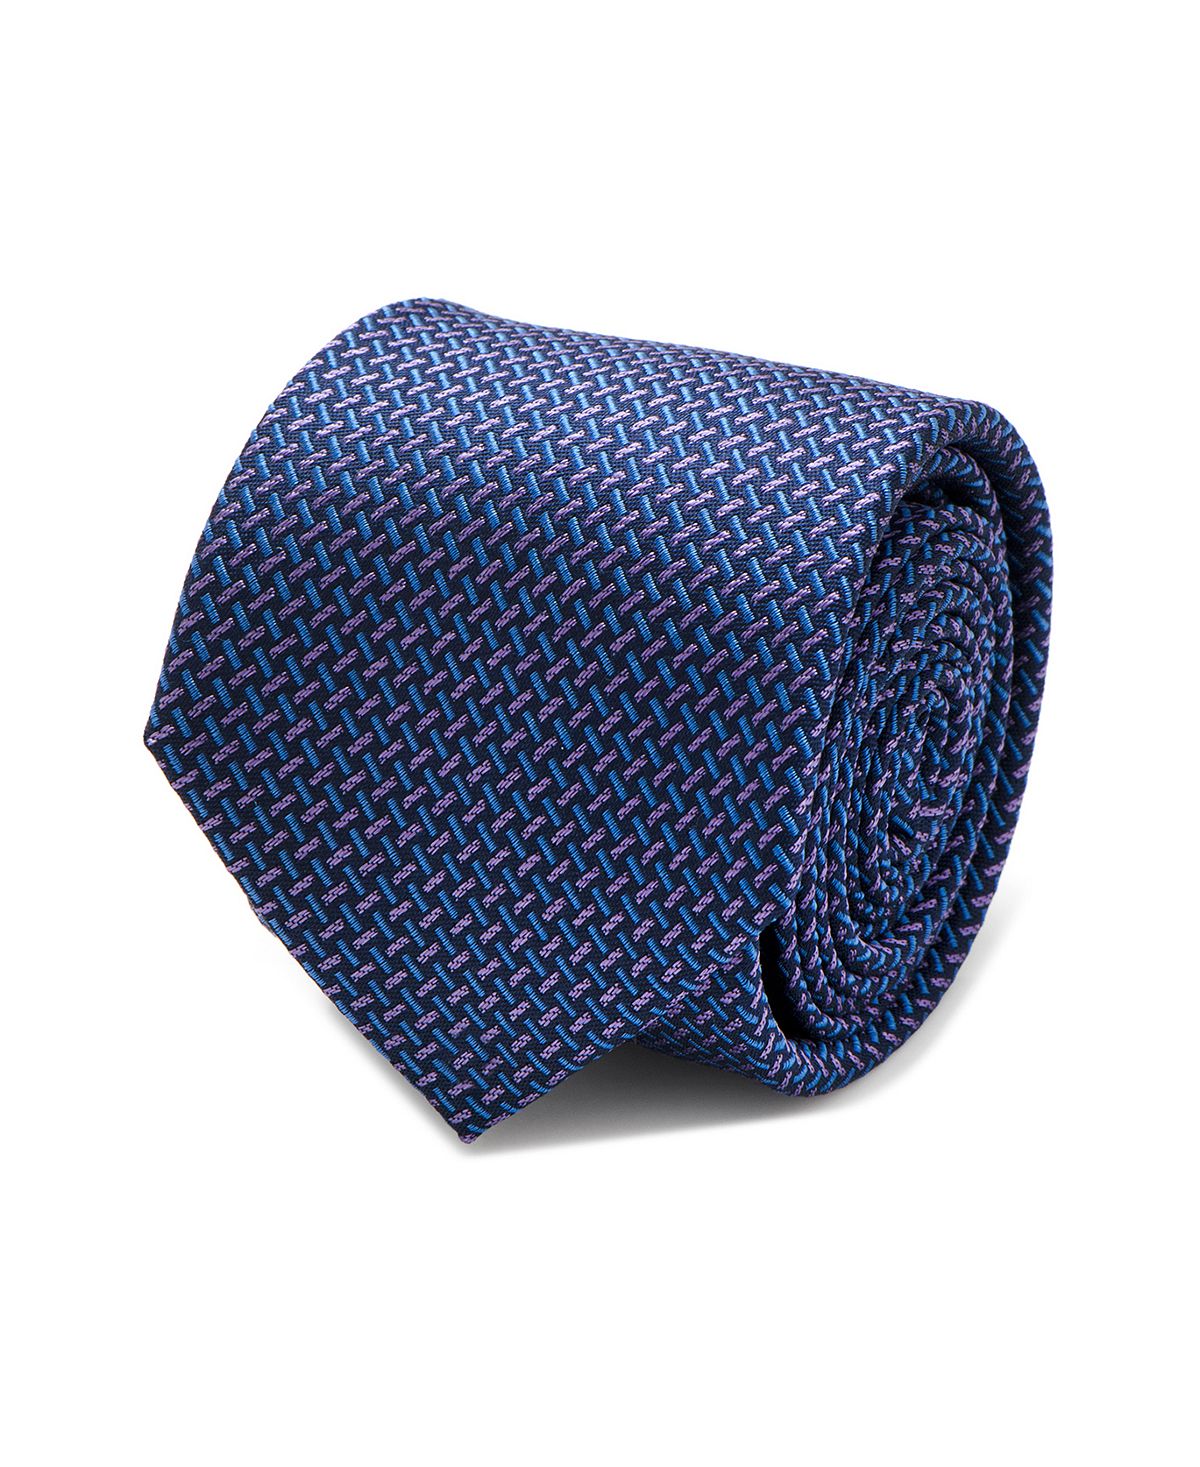 Мужской галстук Mitchell Ox & Bull Trading Co. силиконовый чехол на vivo x21s синий узор для виво икс21 с